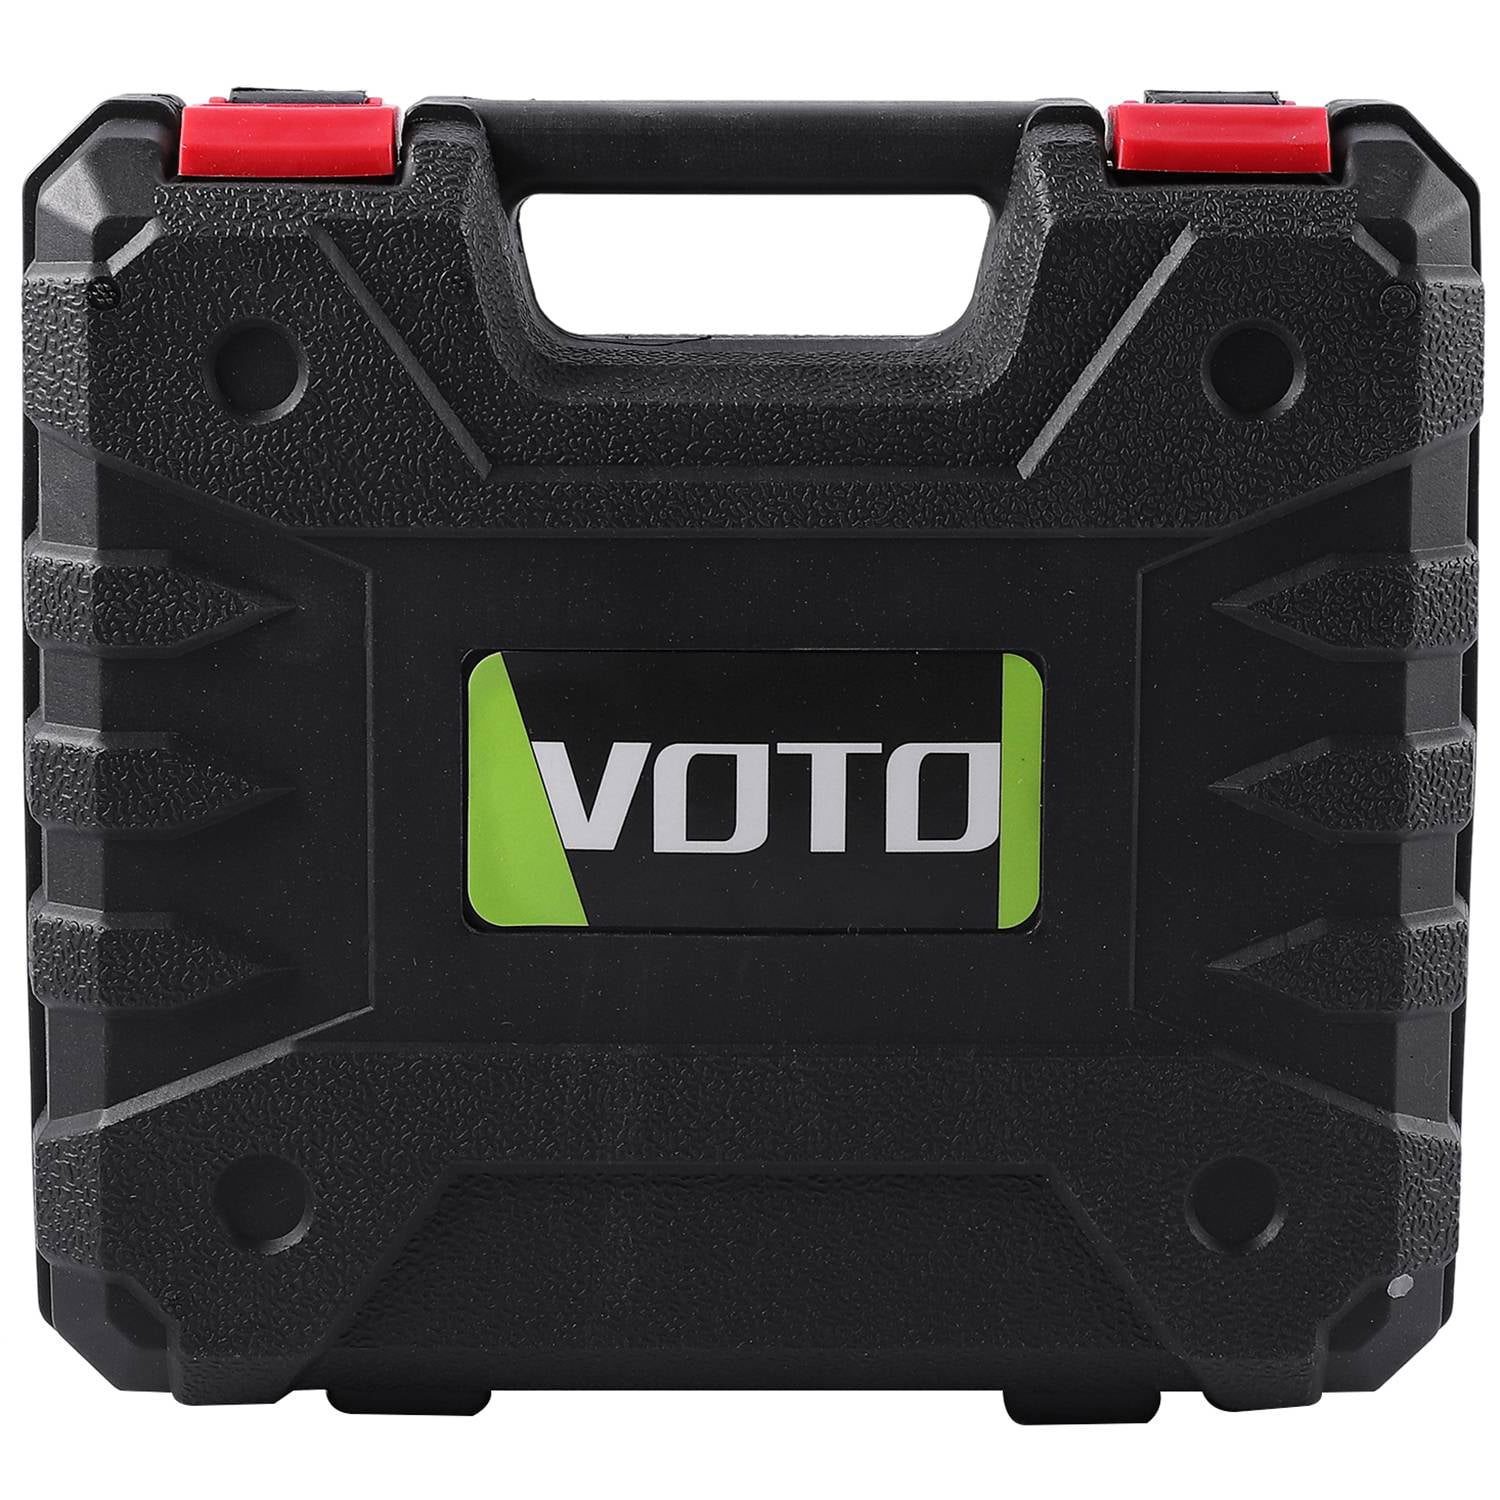 Voto Power Tool Suitcase 12V Electric Drill Dedicated Tool Box Storage Case E1P1 